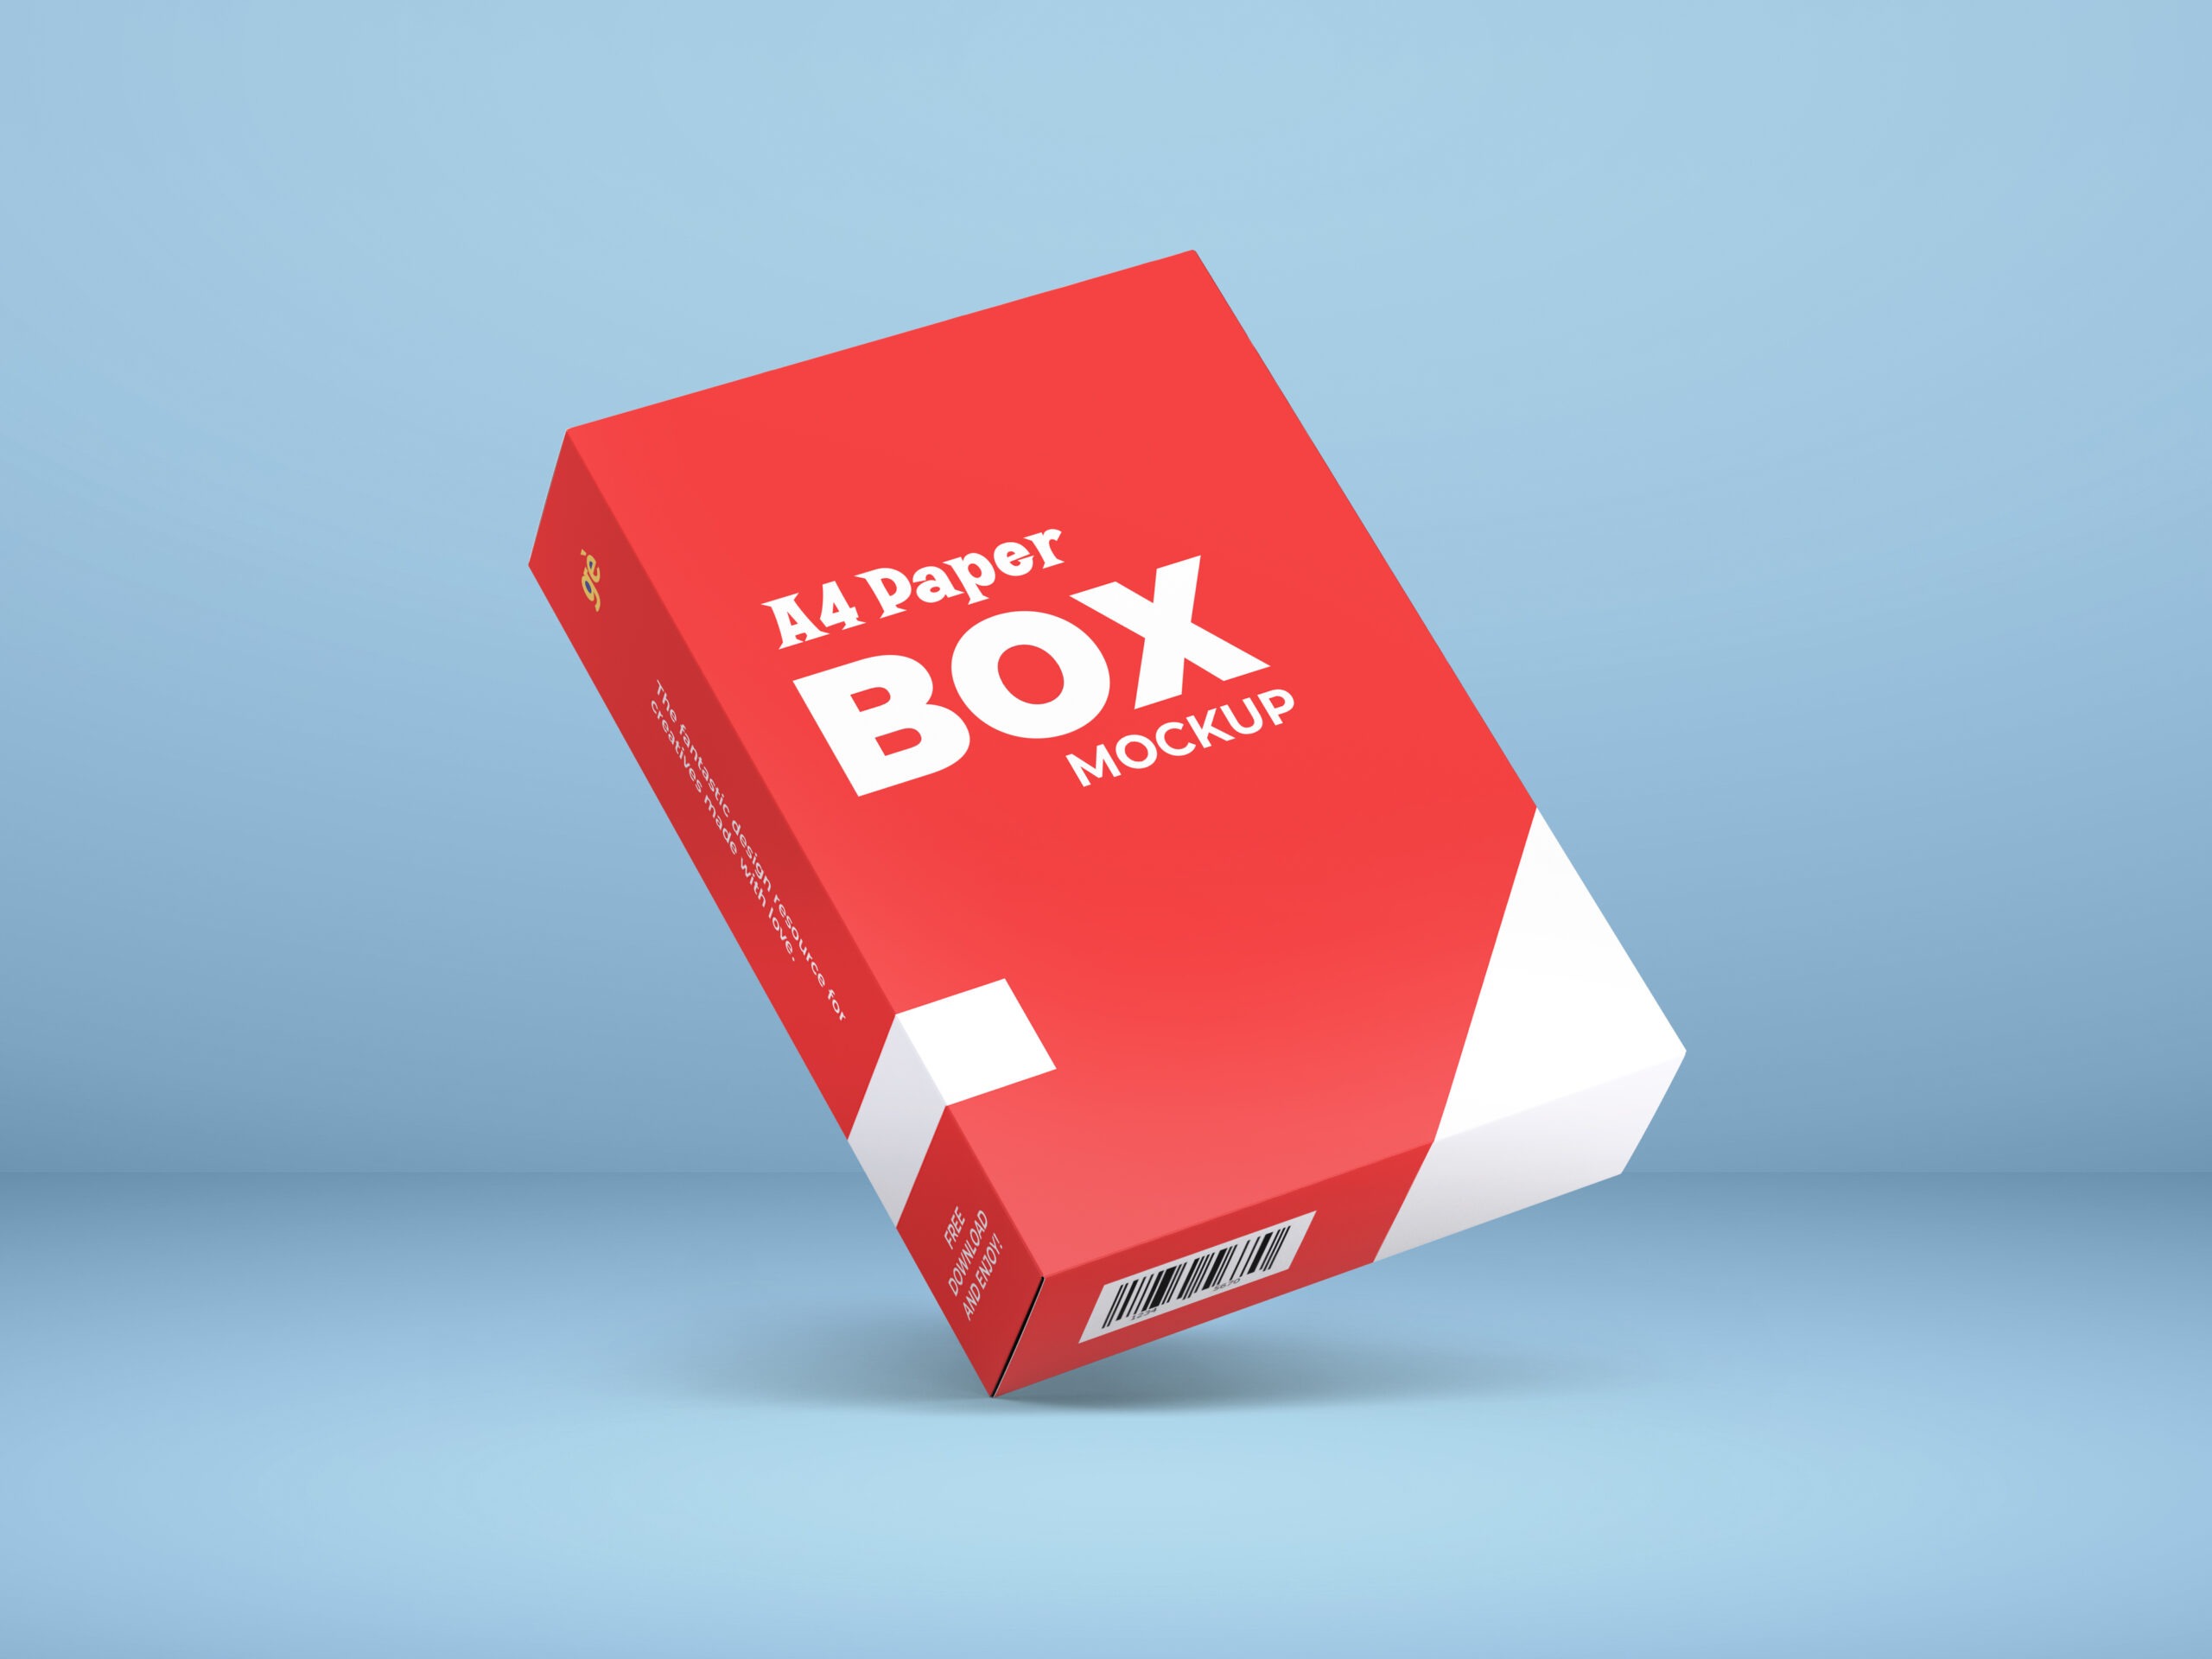 A4-paper--box-mockup-free-download